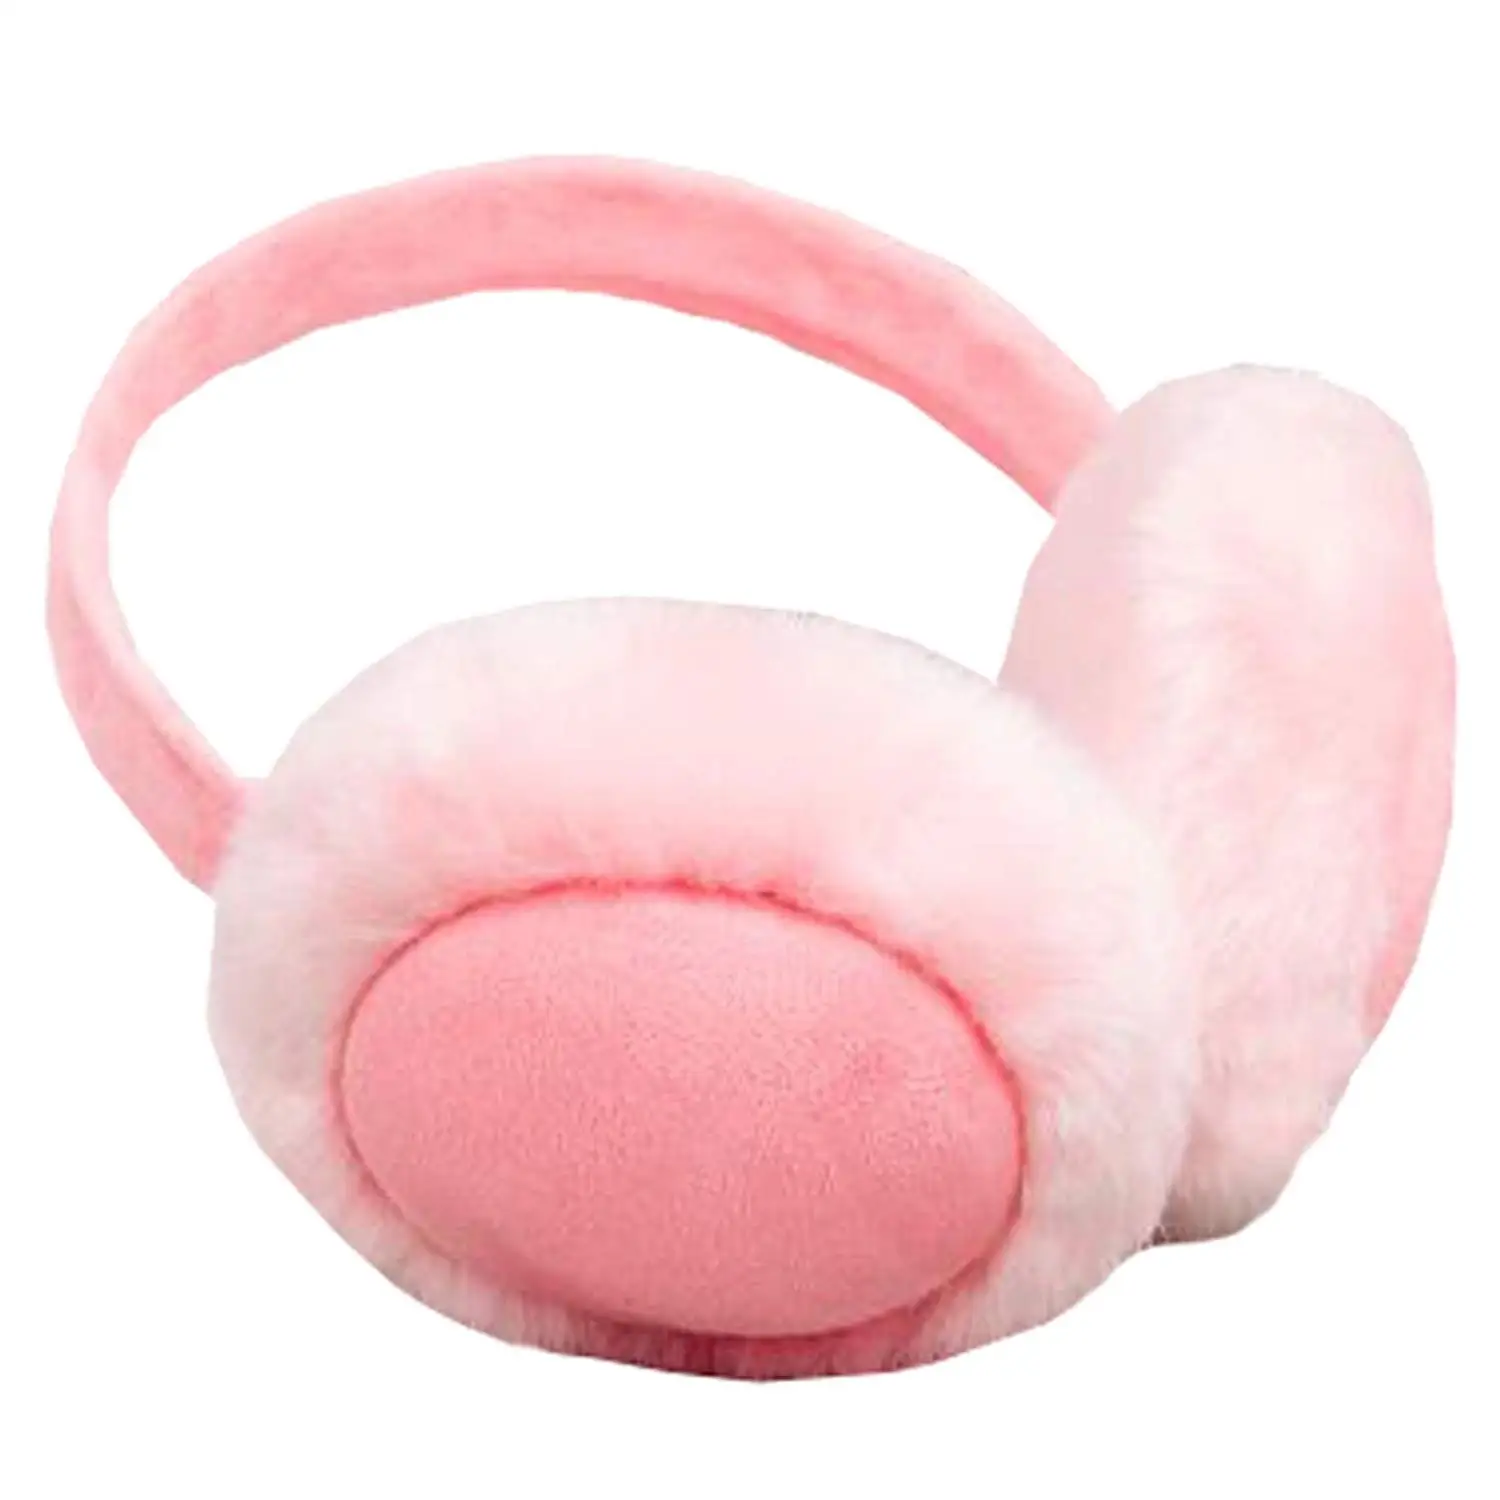 Cheap Ear Muffs, find Ear Muffs deals on line at Alibaba.com